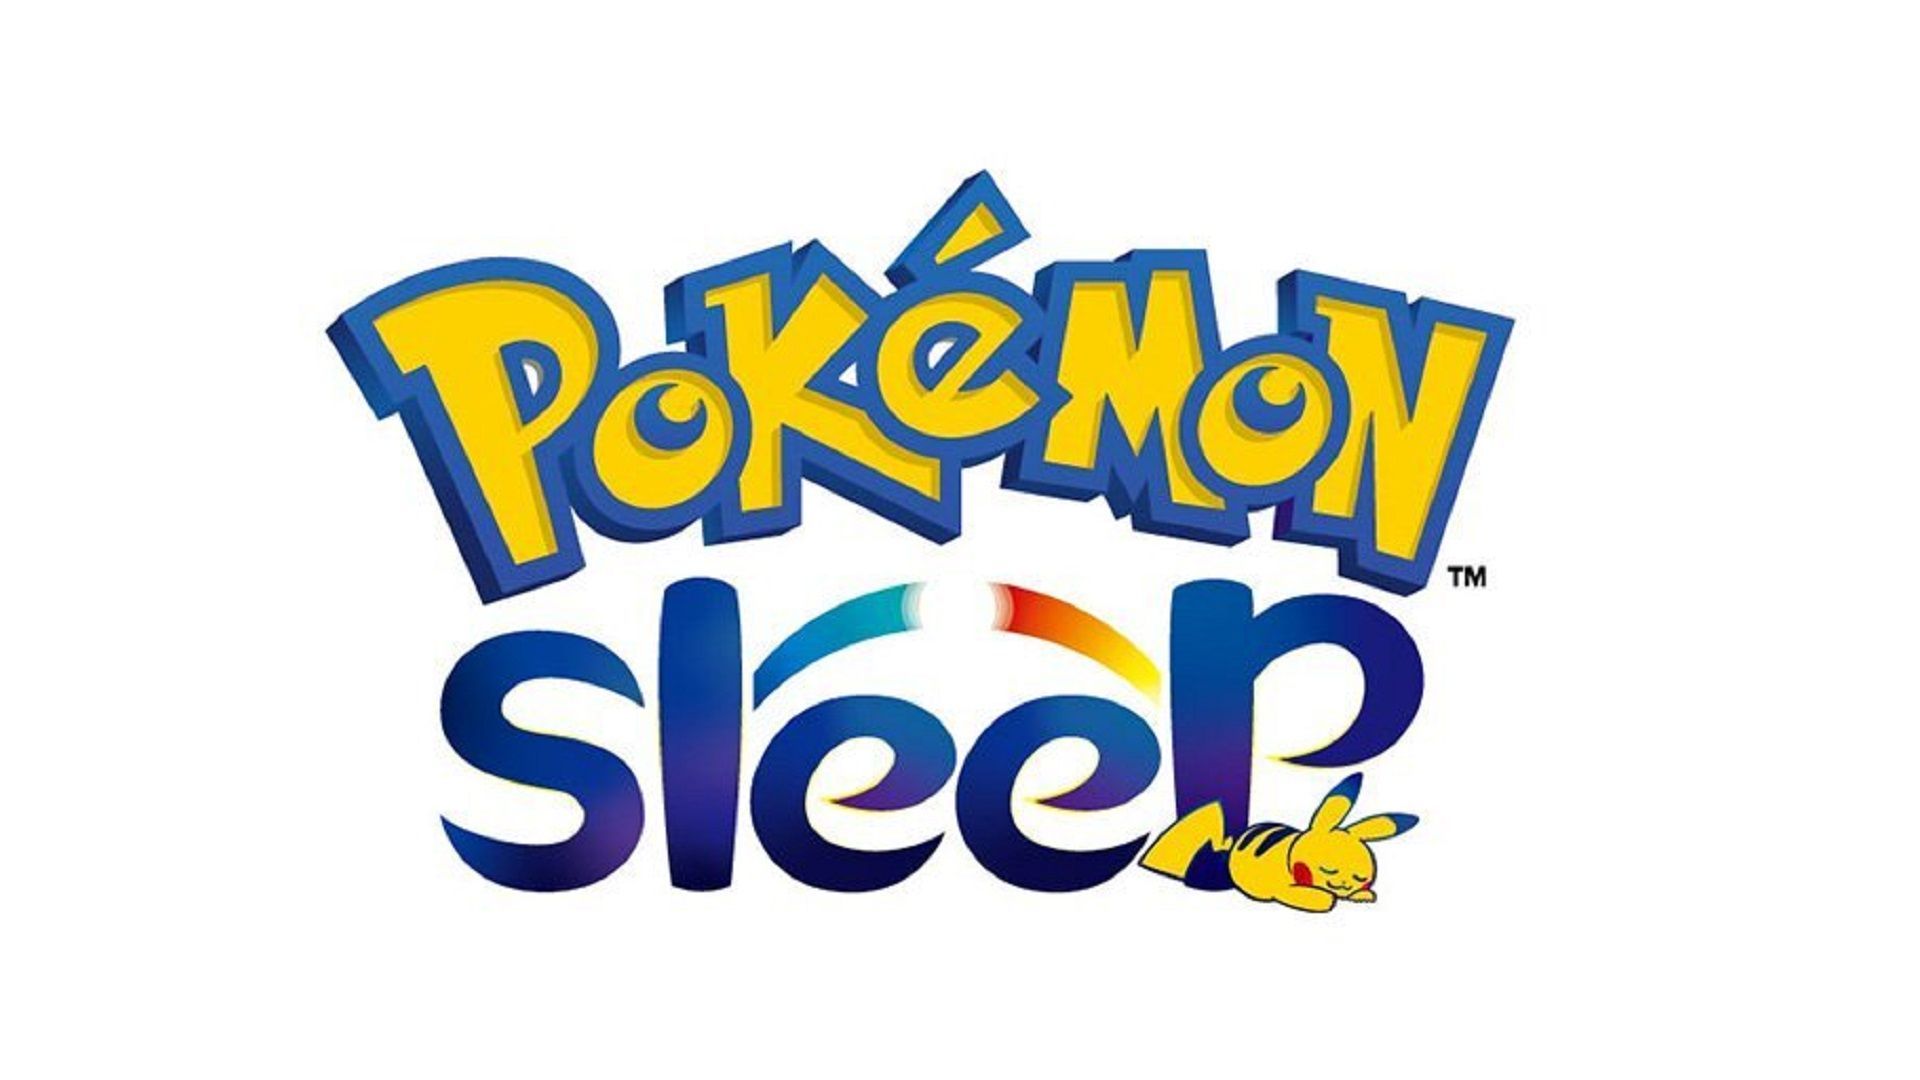 Pokémon Sleep: New Pokémon Game You Can Play While Sleeping